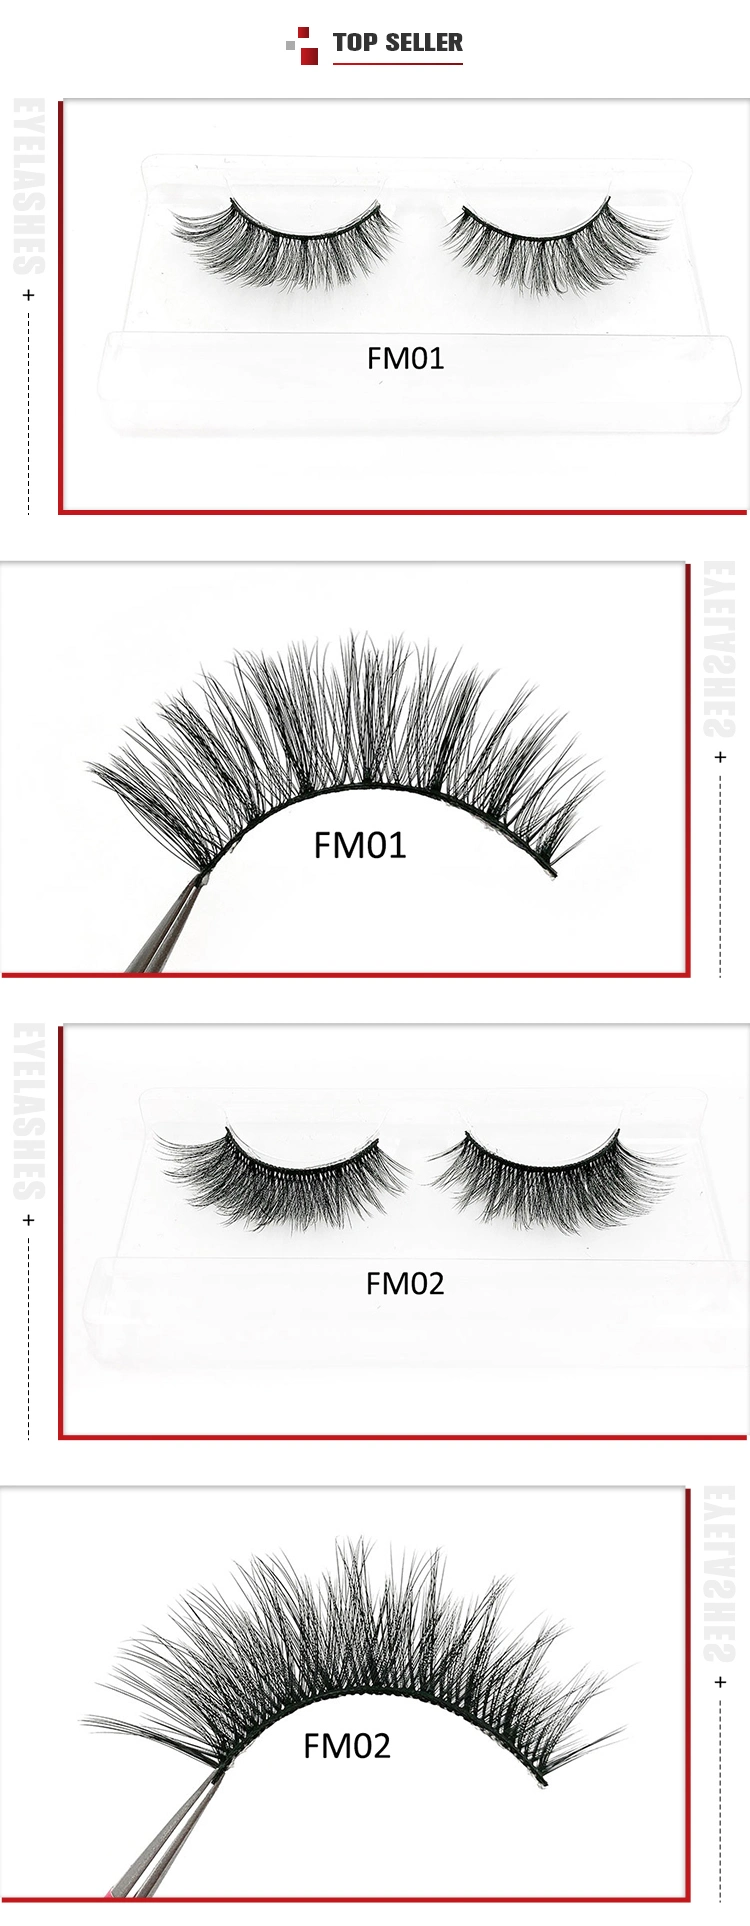 Wholesale 25mm 3D 5D Eyelash Vendor Faux Mink Eyelashes with Custom Label